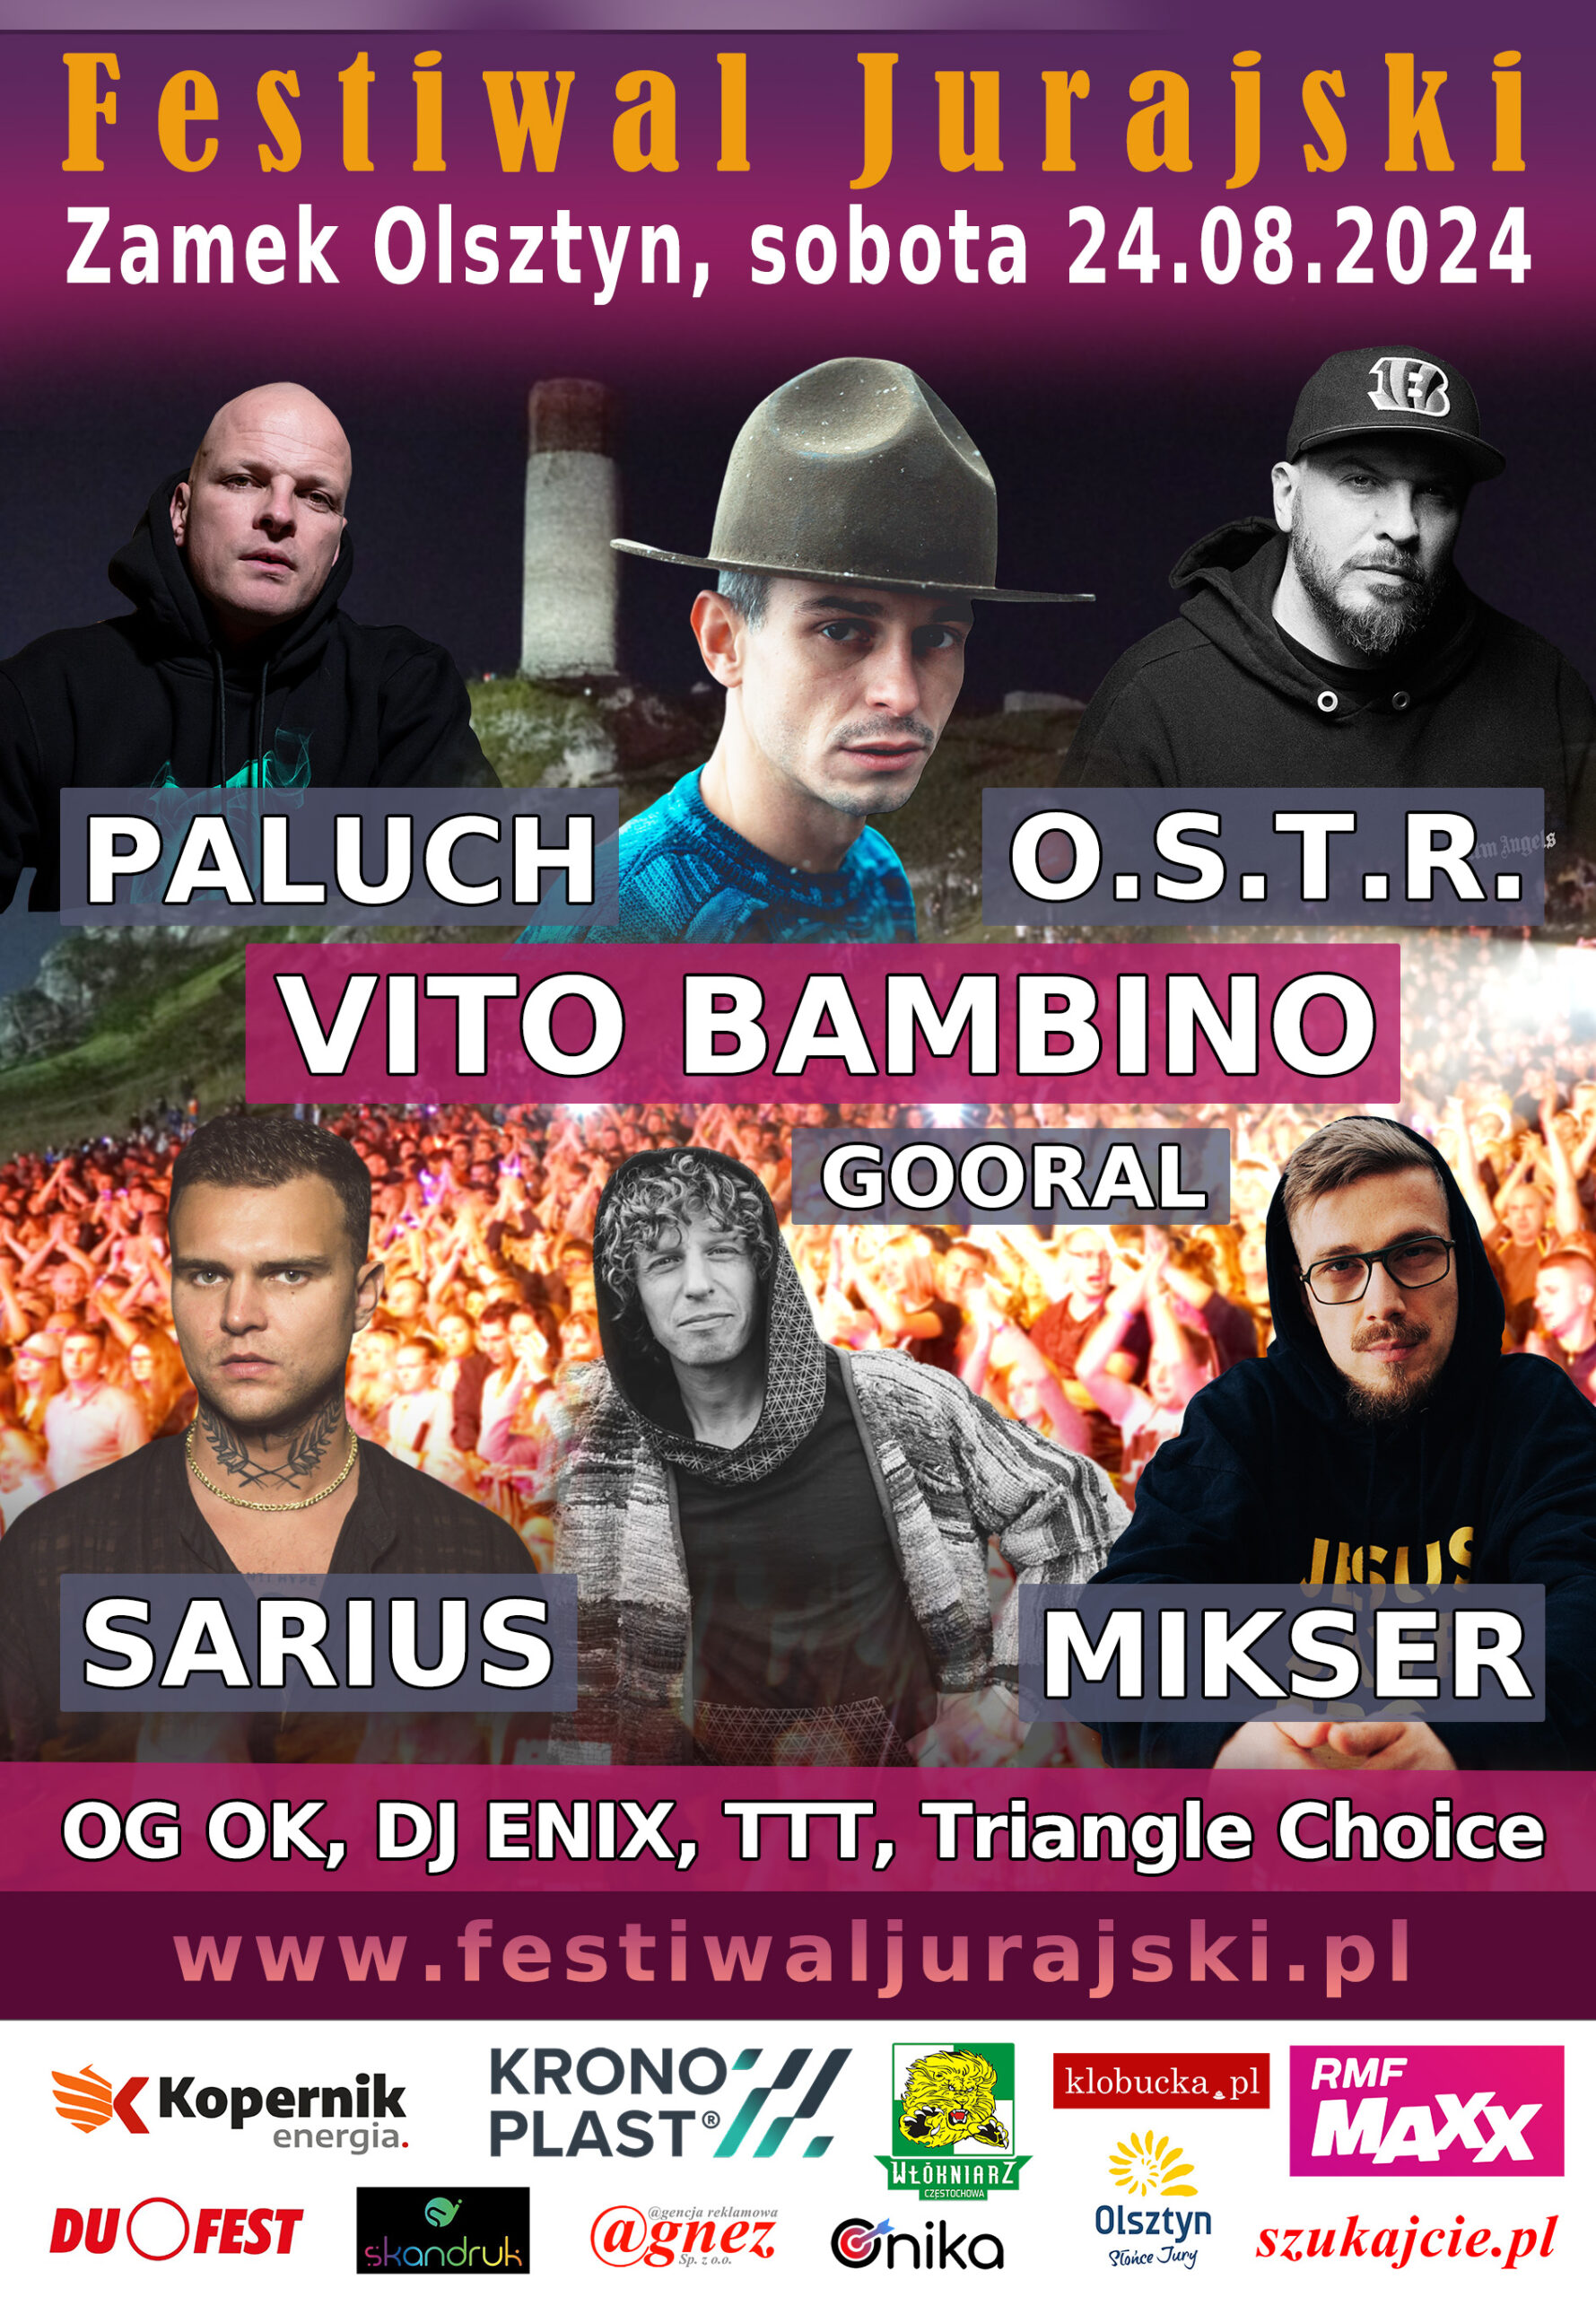 Paluch, Vito Bambino, Sarius, O.S.T.R., Mikser, Gooral, OG OK, DJ ENIX, TTT, Triangle Choice